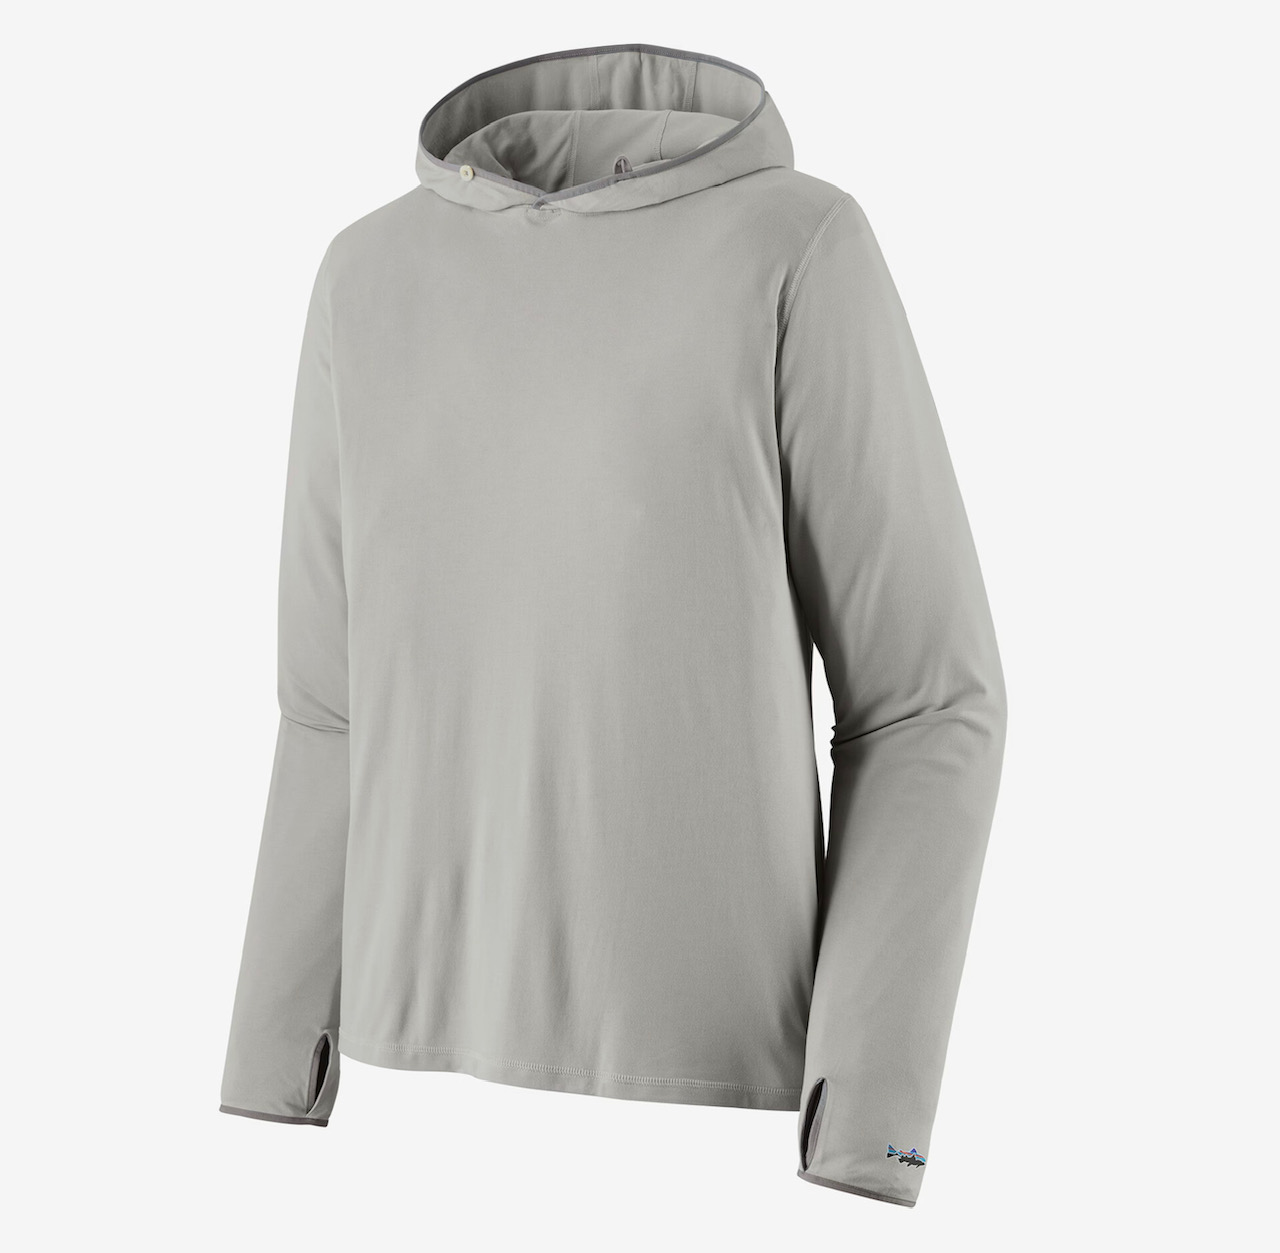 Patagonia M's Tropic Comfort Natural UPF Hoody - Tailored Grey - XL